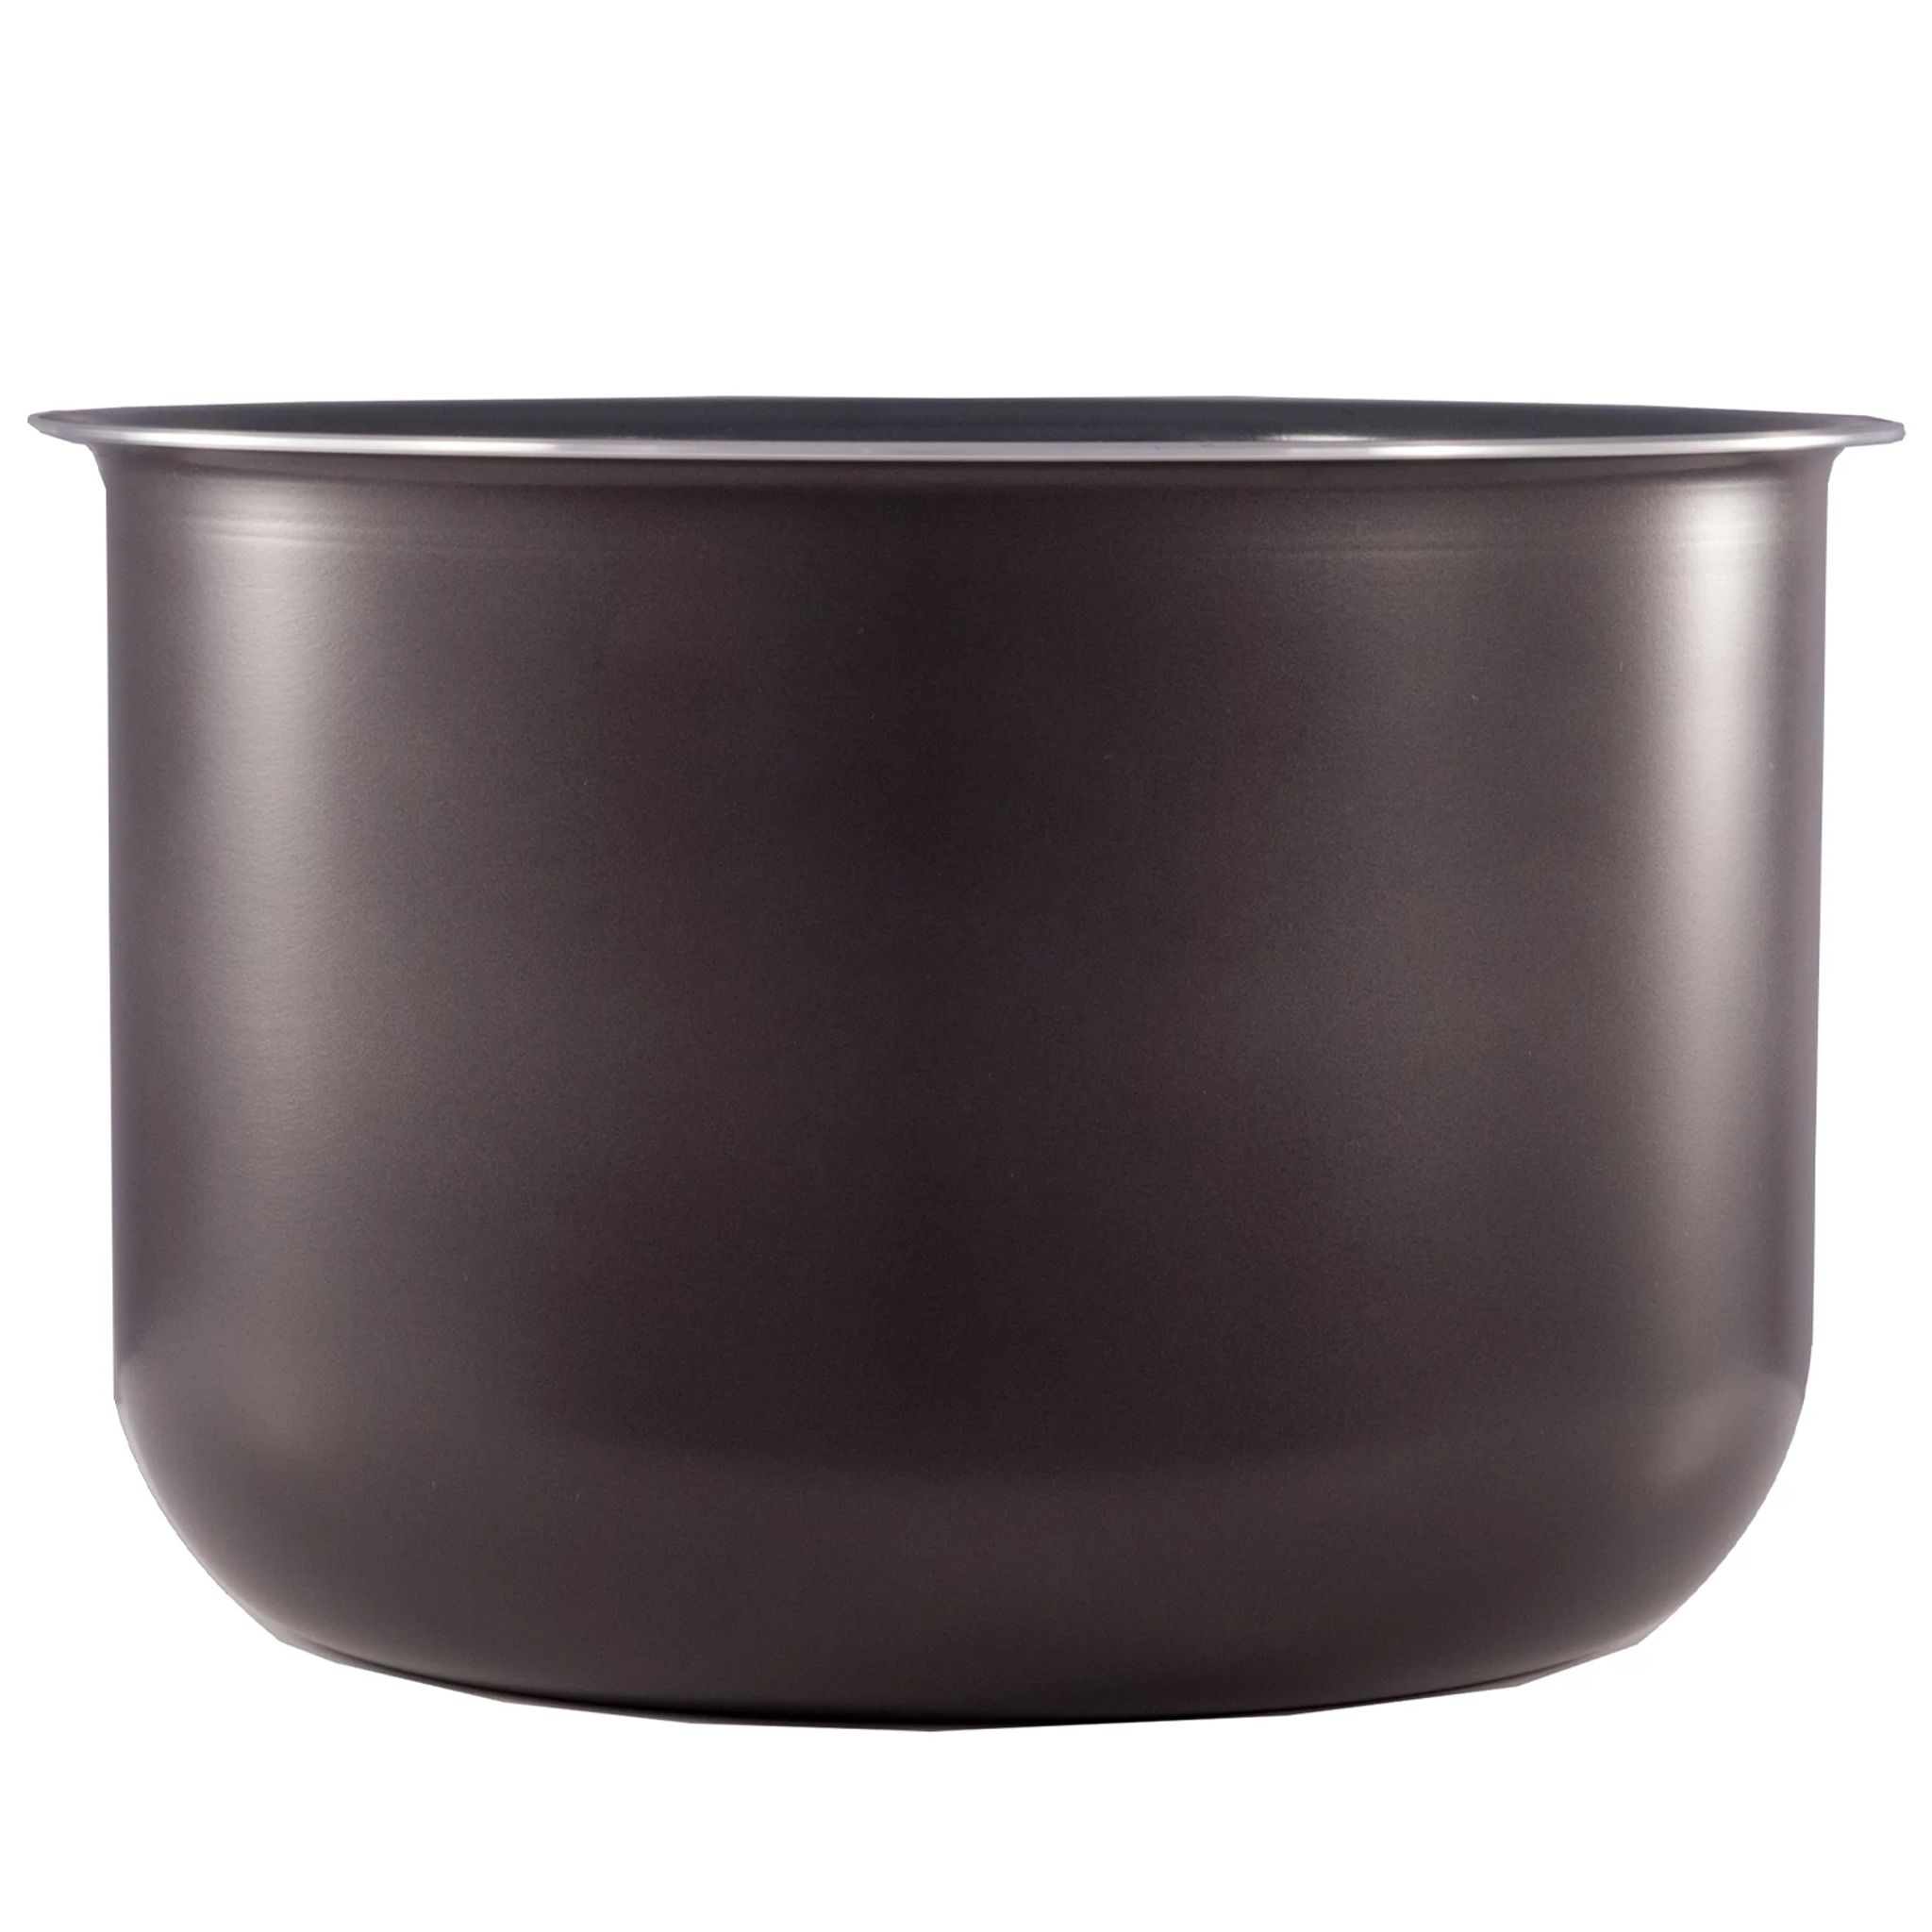 Genuine Instant Pot Stainless Steel Inner Cooking Mini, 3 Quart